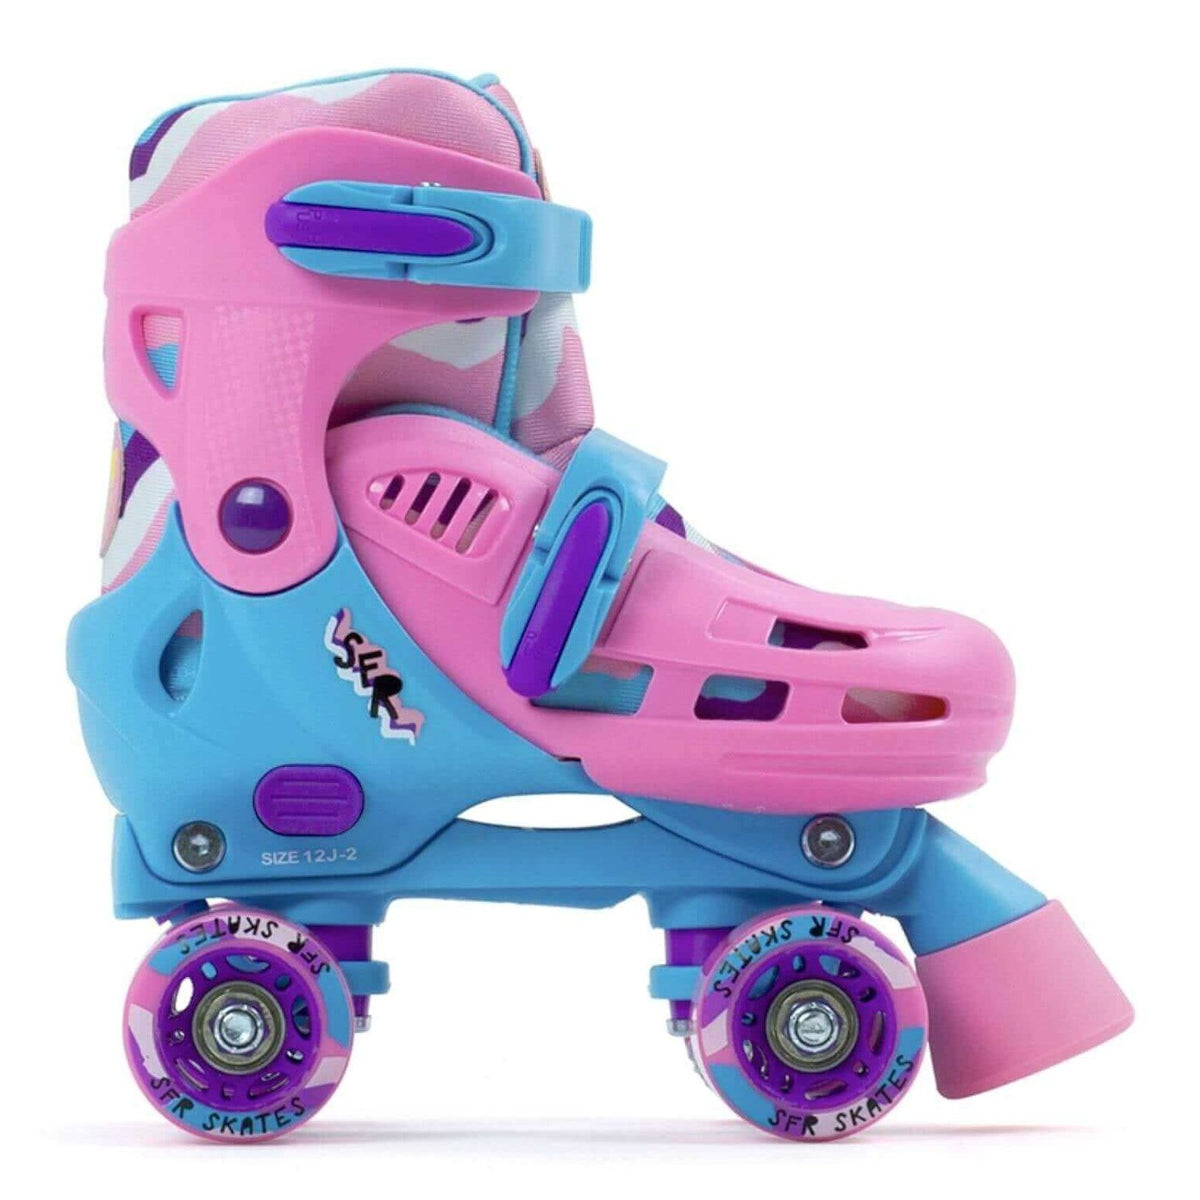 SFR Hurricane III Adjustable Pink/Blue Quad Skates